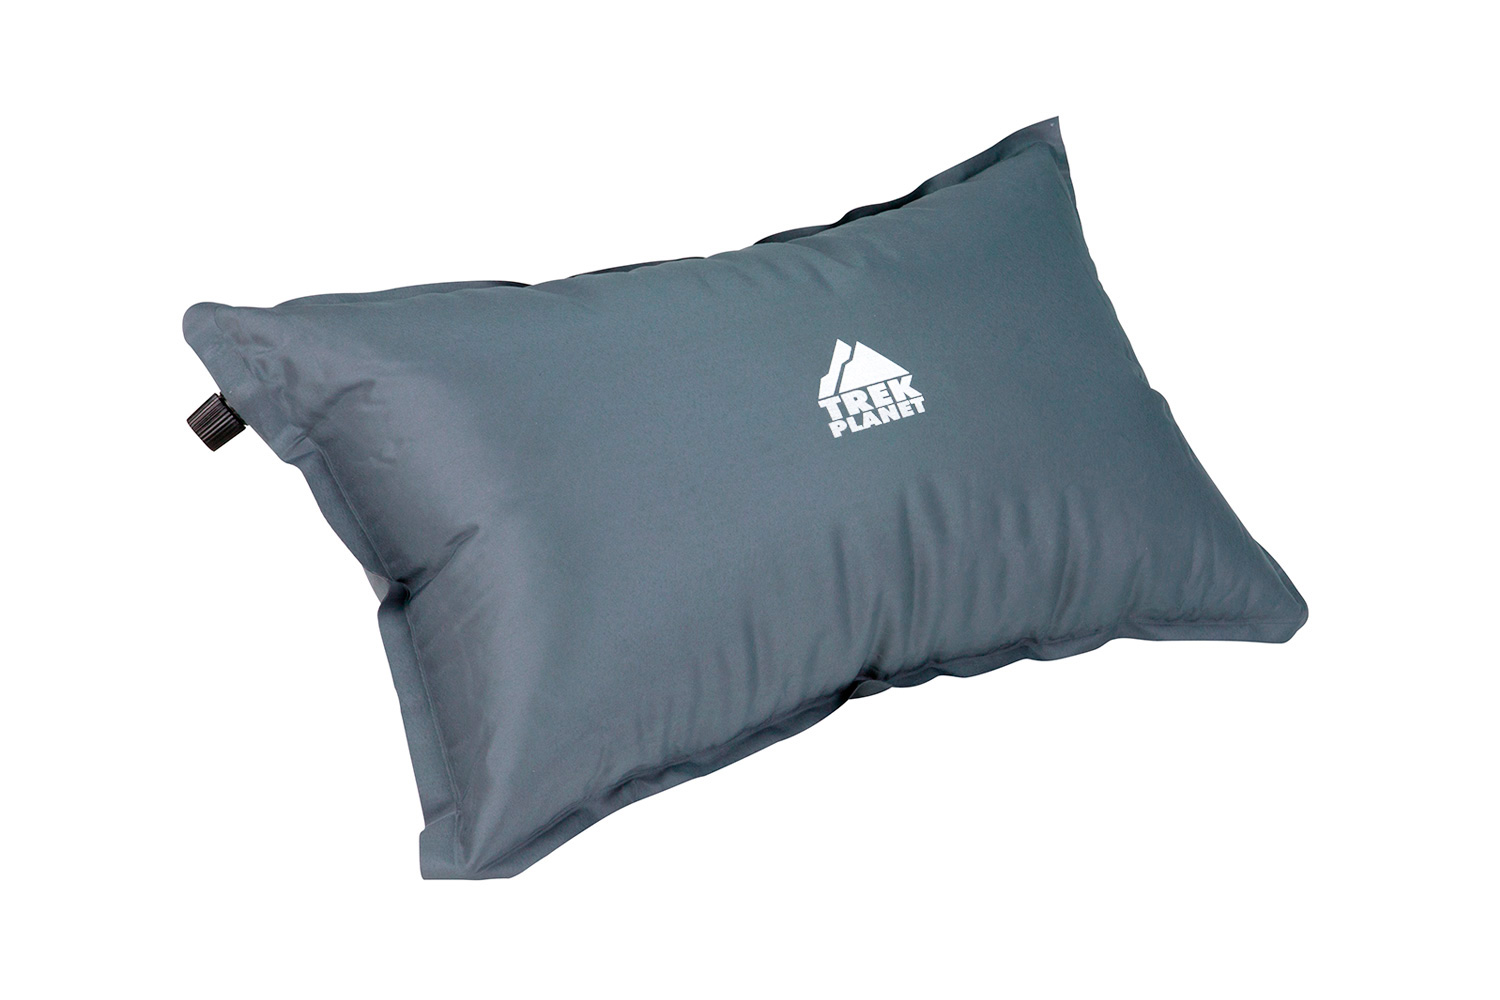 Подушка TREK PLANET Relax Pillow самонадувающаяся серая